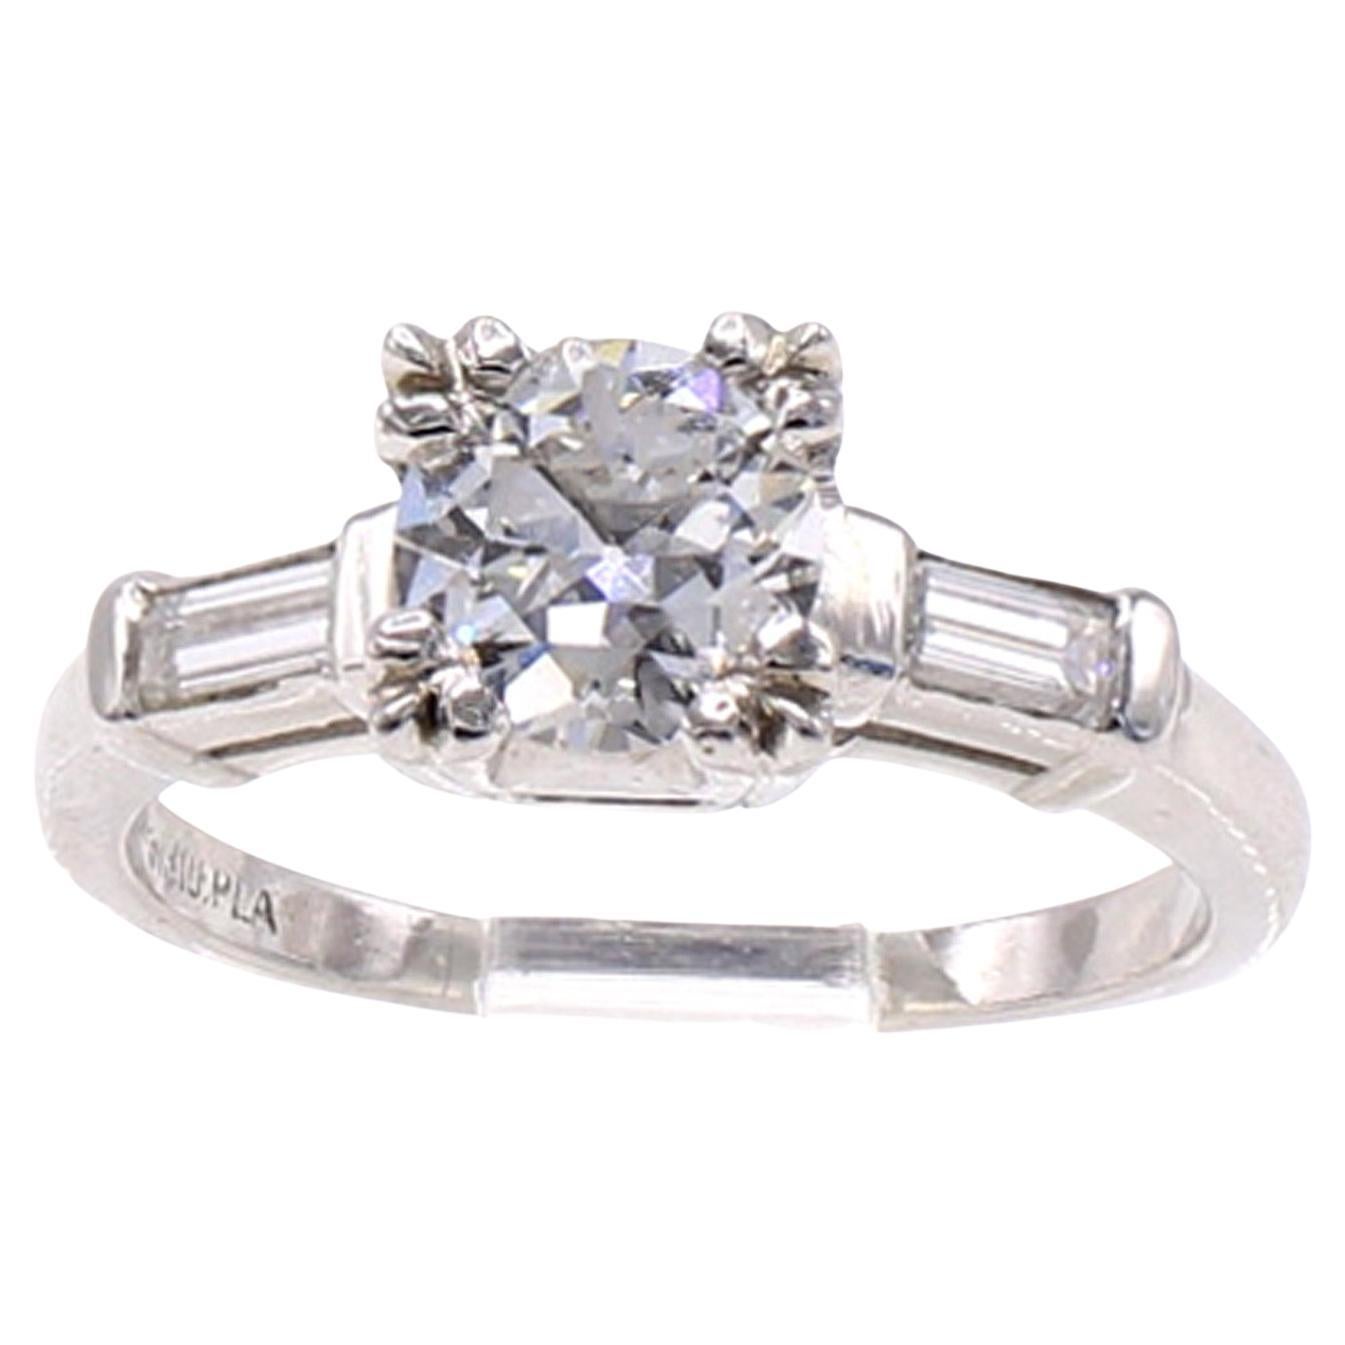  Old European Cut 0.91 Carat GIA Certified Diamond Platinum Engagement Ring For Sale